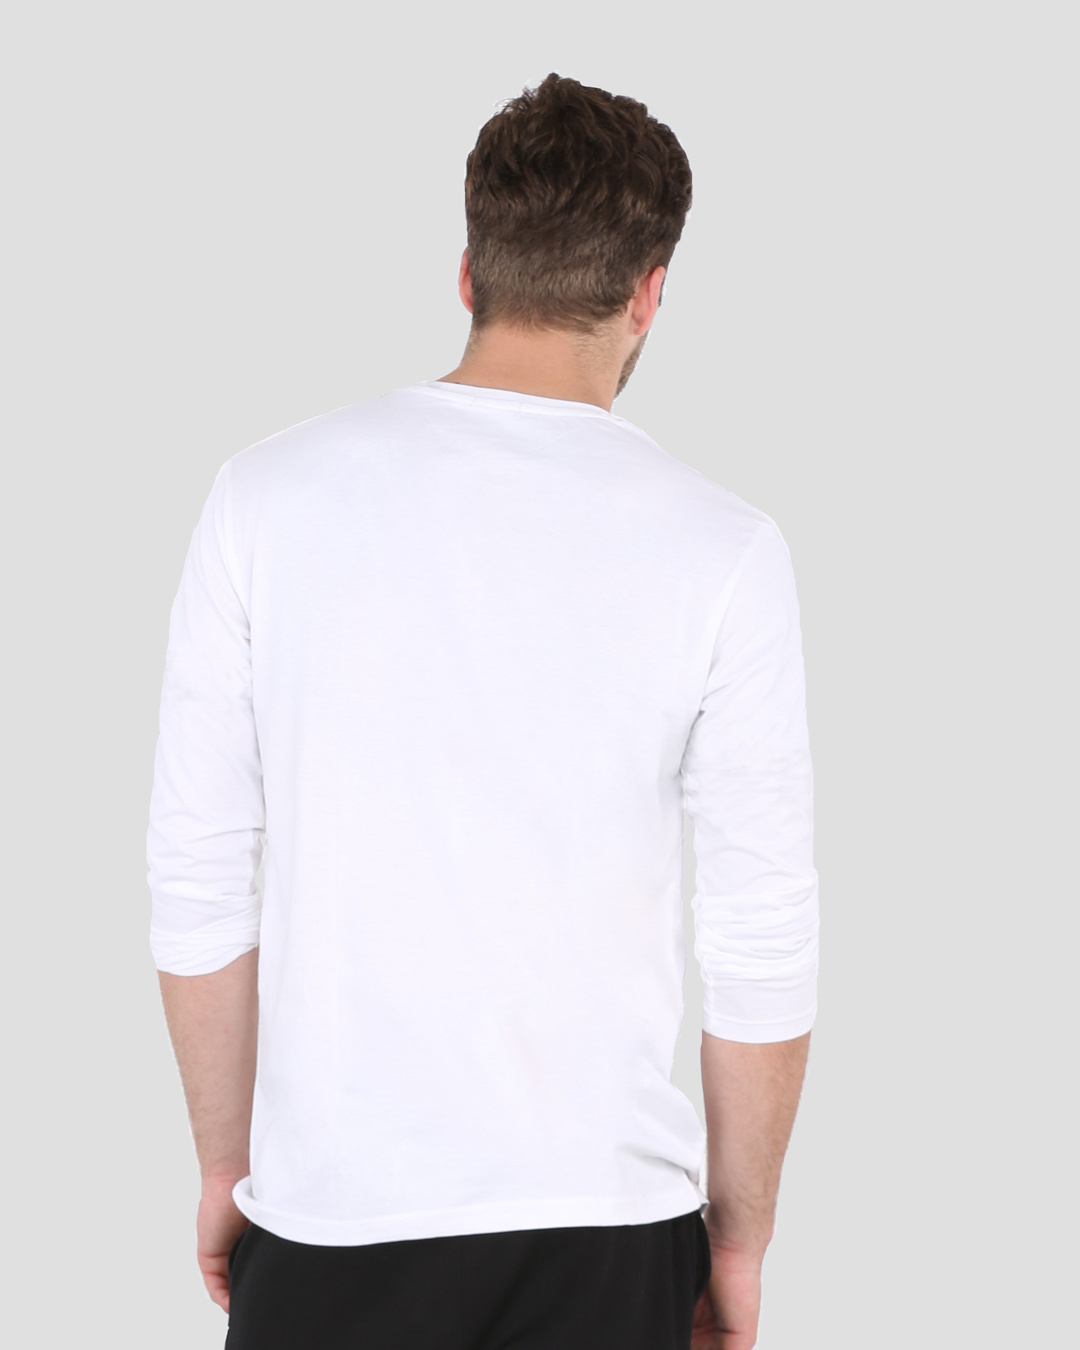 Shop Eat Sleep Garba Repeat Full Sleeve T-Shirt White-Back